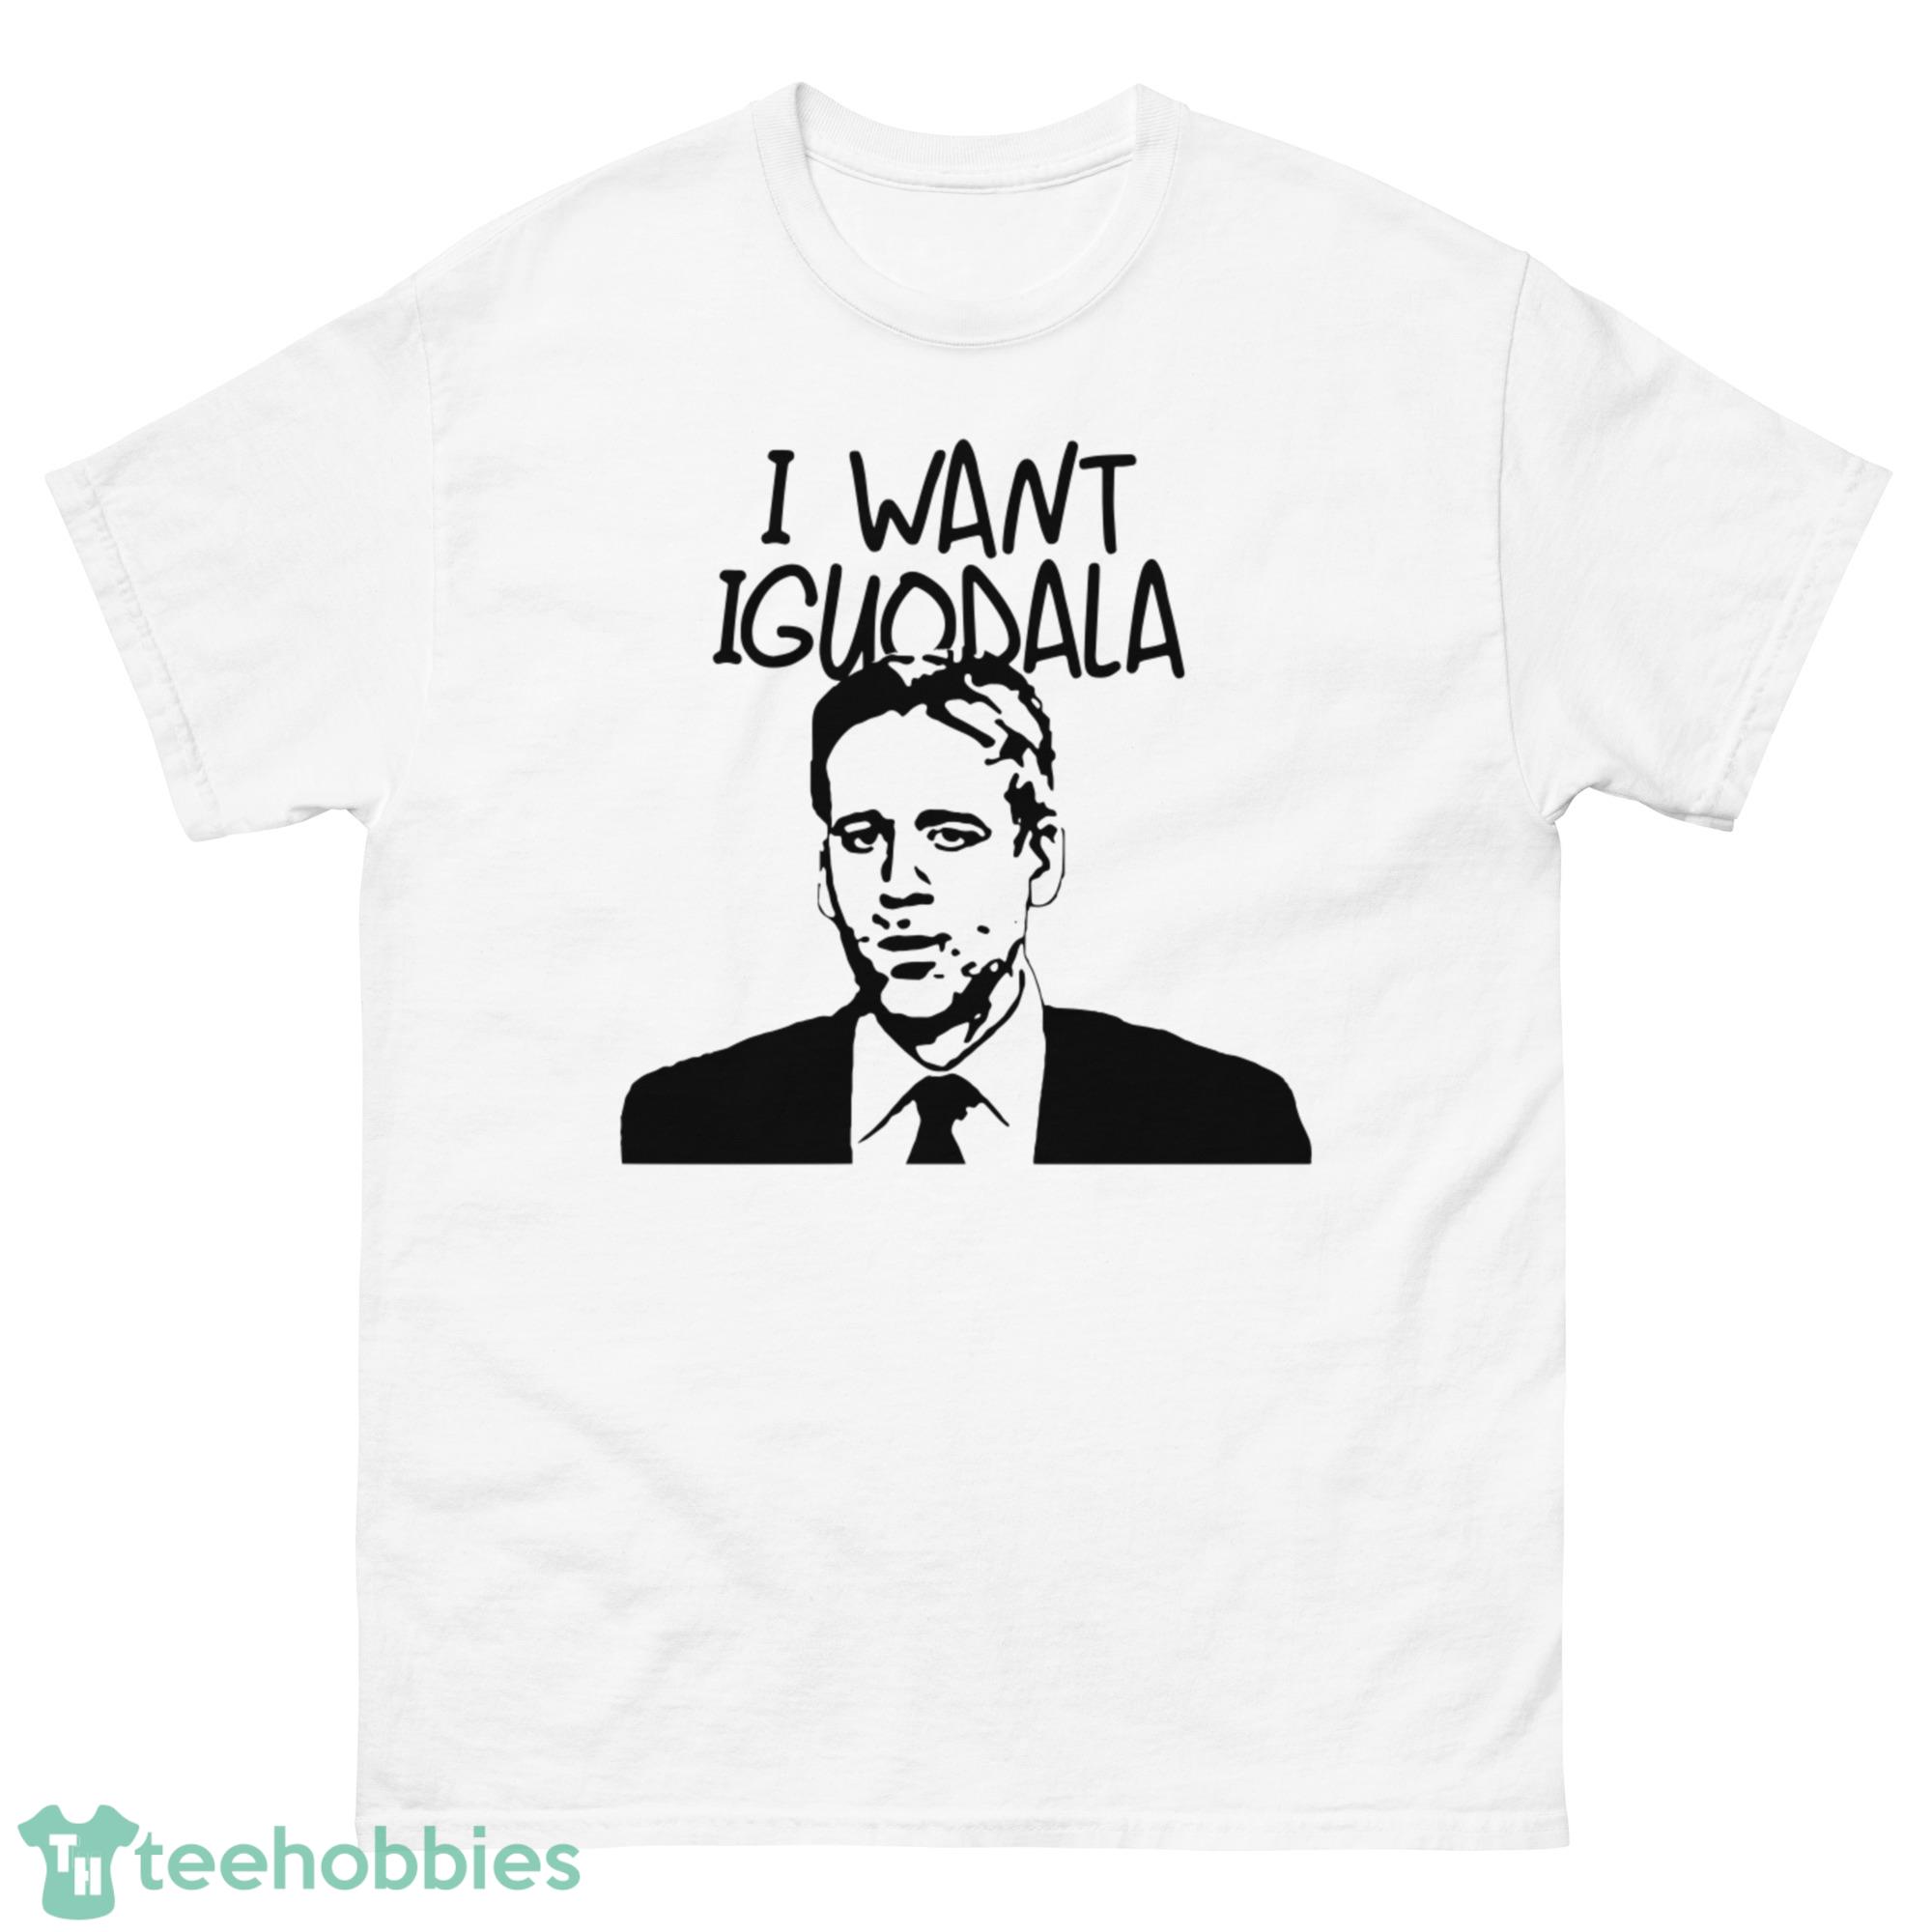 I Want Iguodala Max Kellerman Shirt